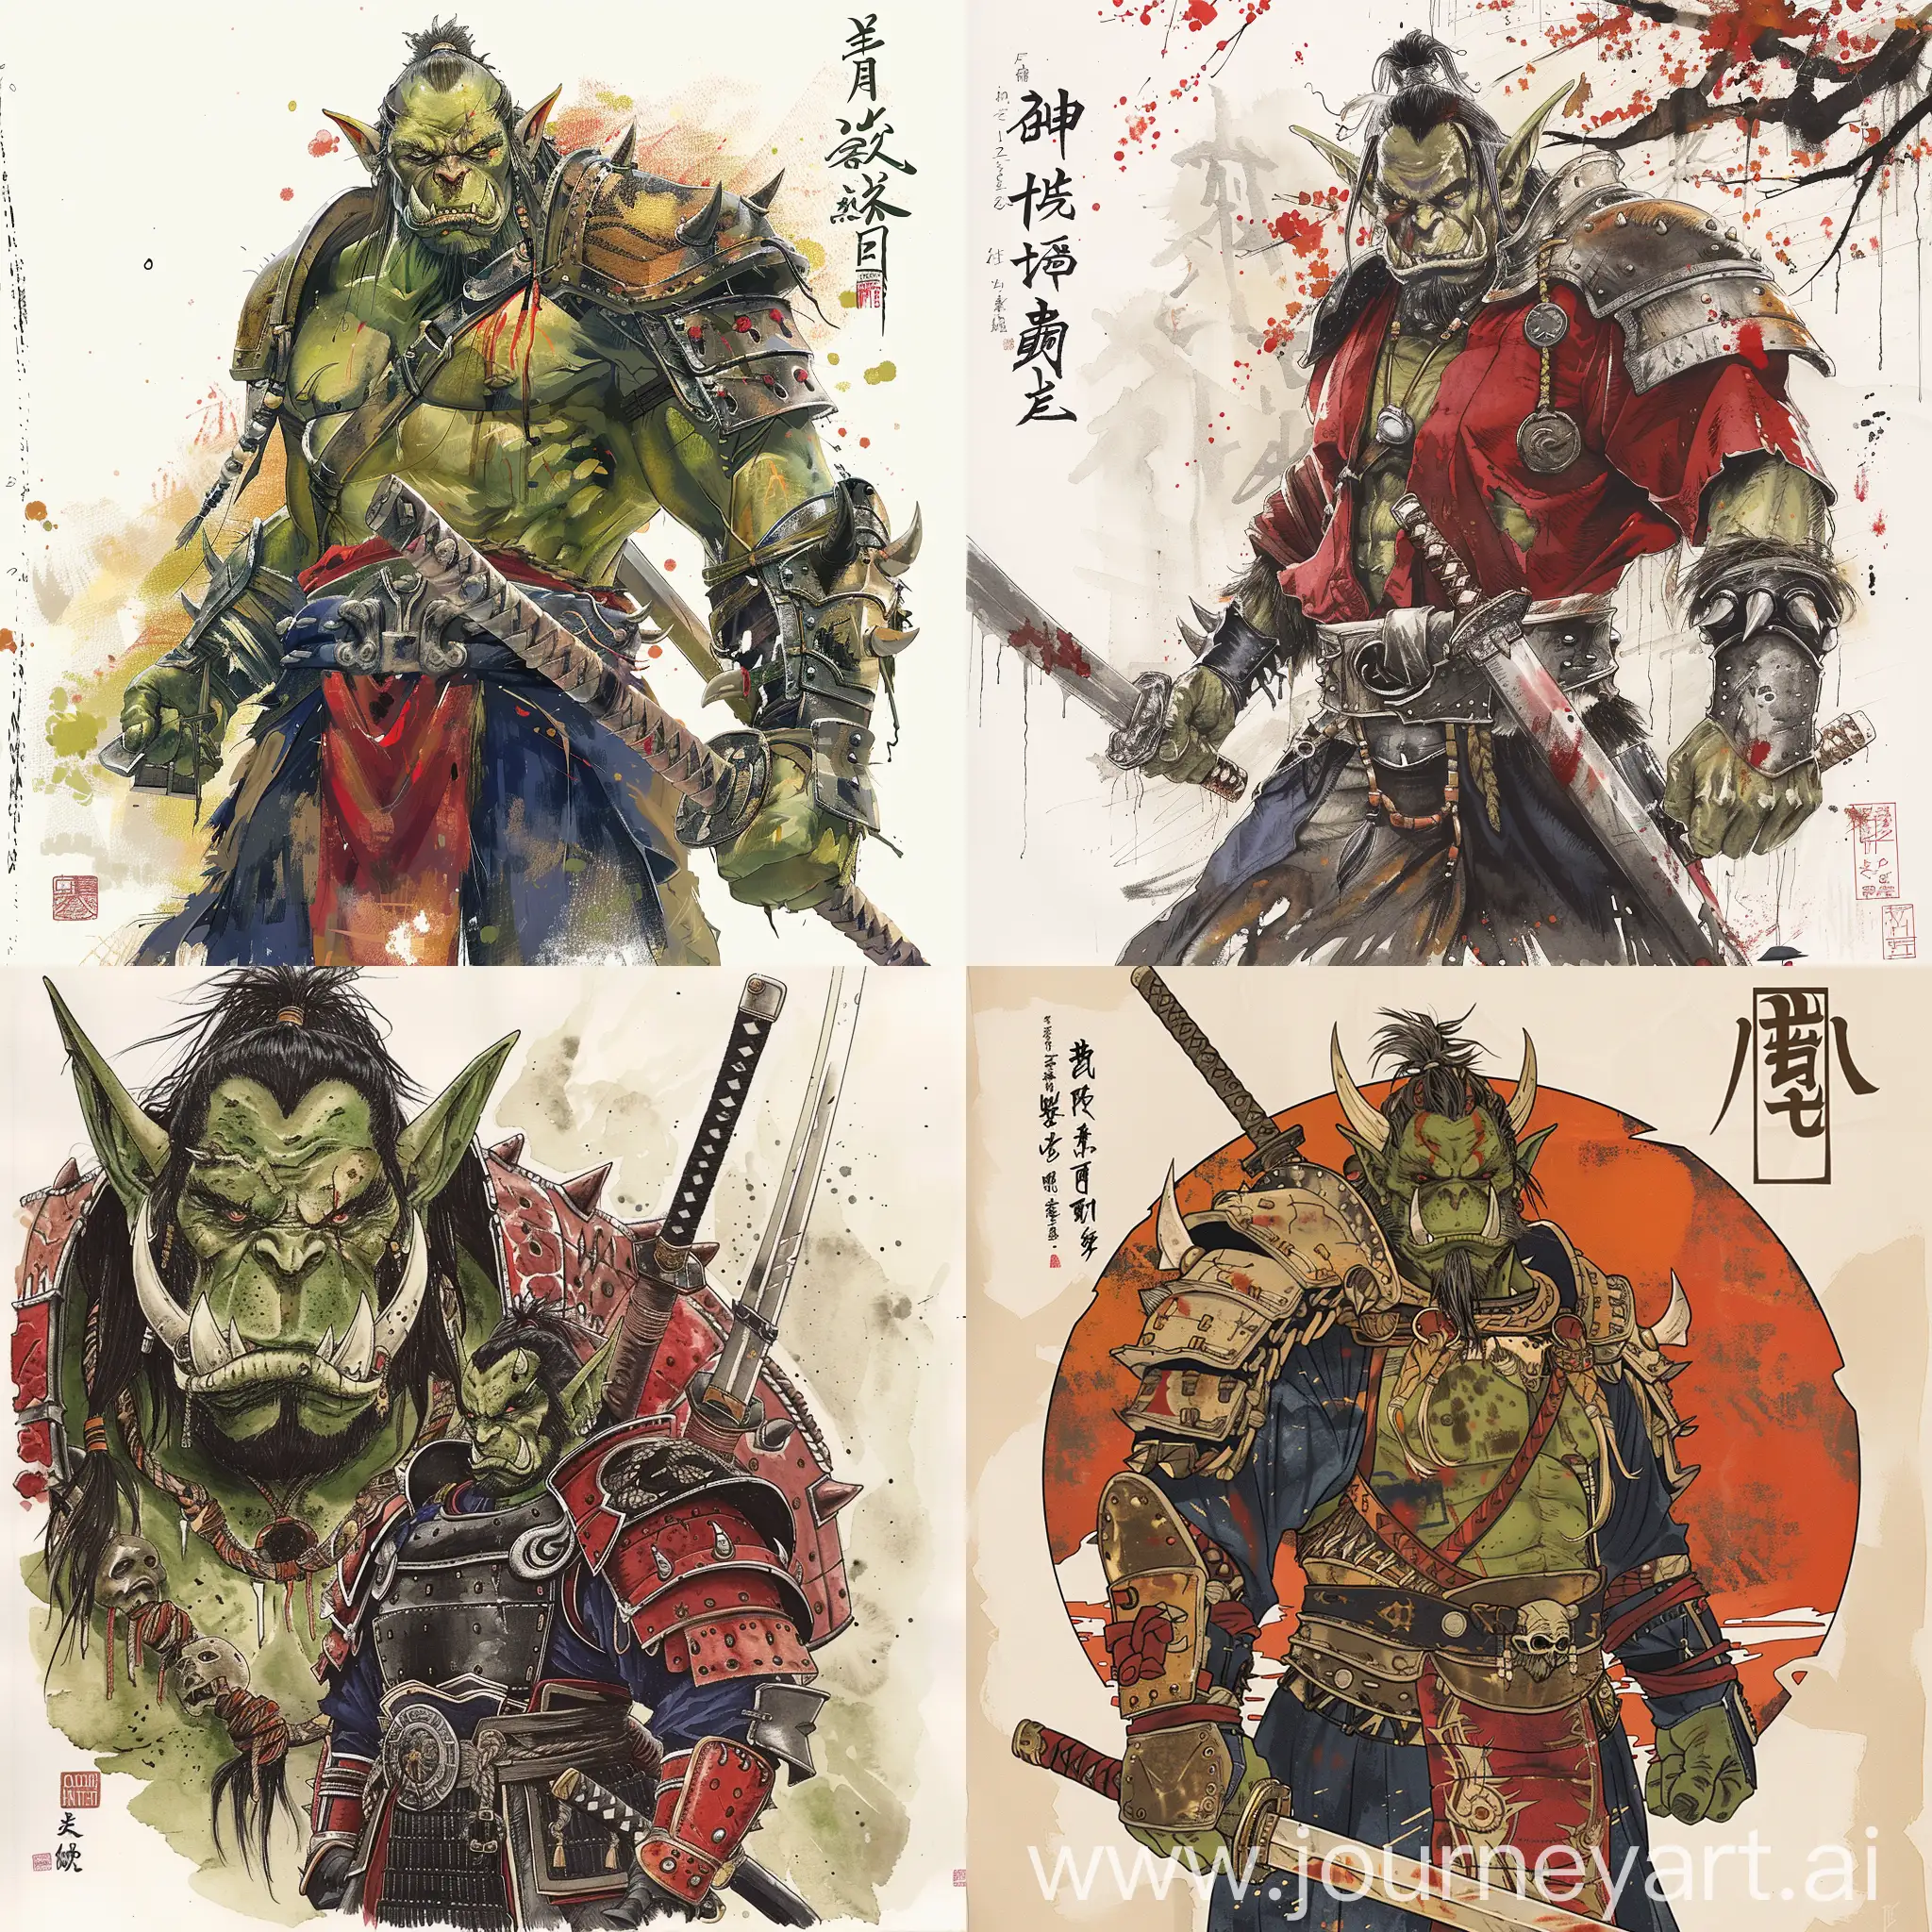 Samurai-Blademaster-Orc-from-World-of-Warcraft-in-Yamatoe-Style